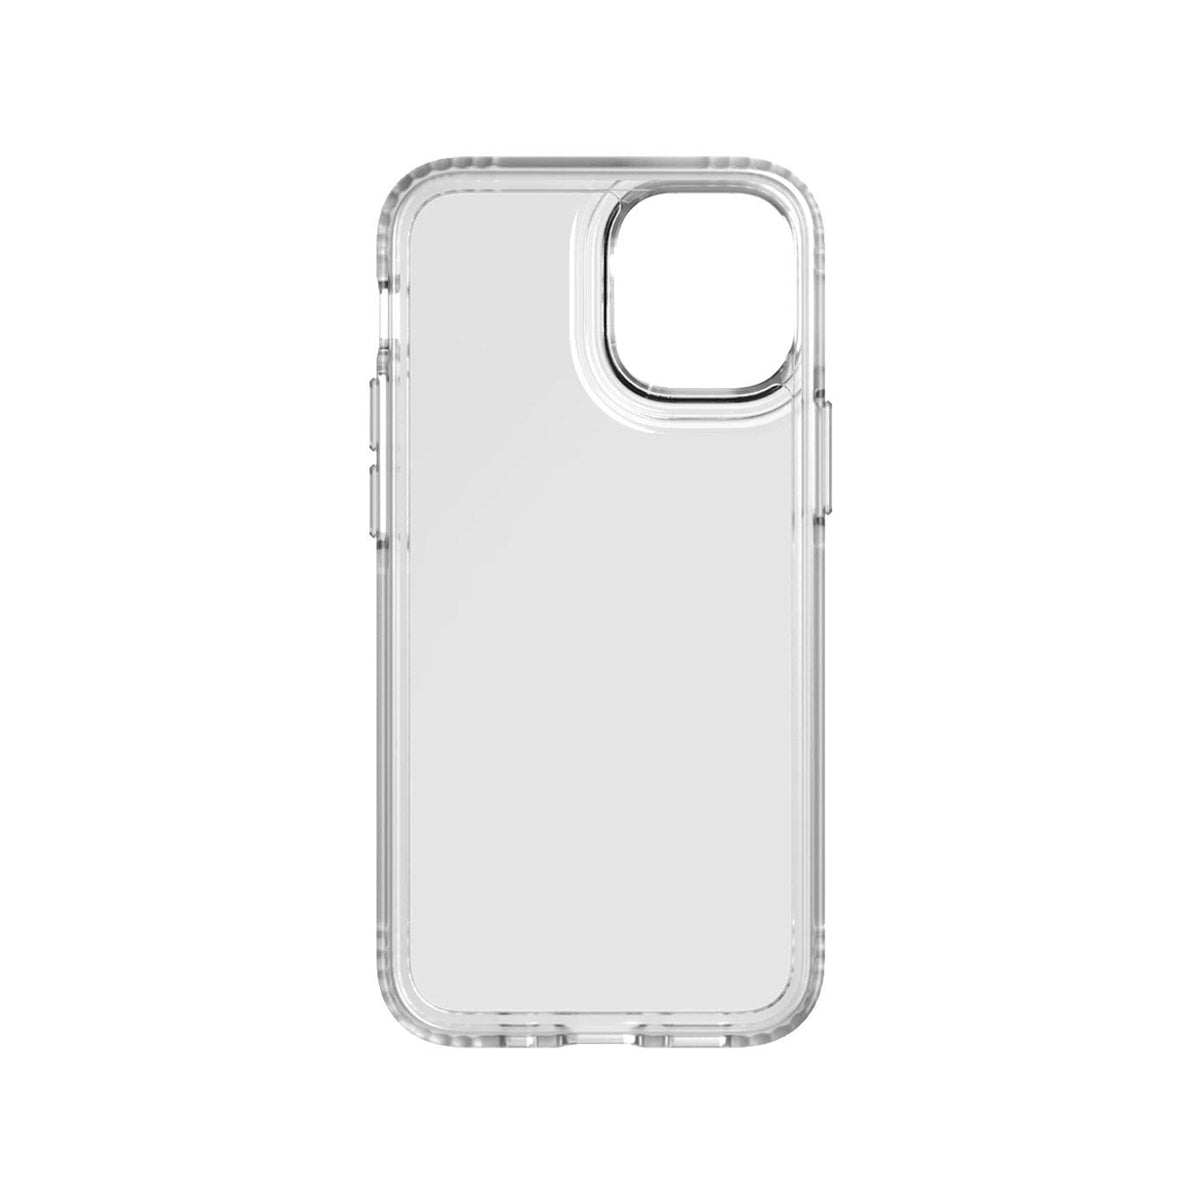 Tech21 Evo Clear Case for iPhone 12 mini T21-8357 - Clear.